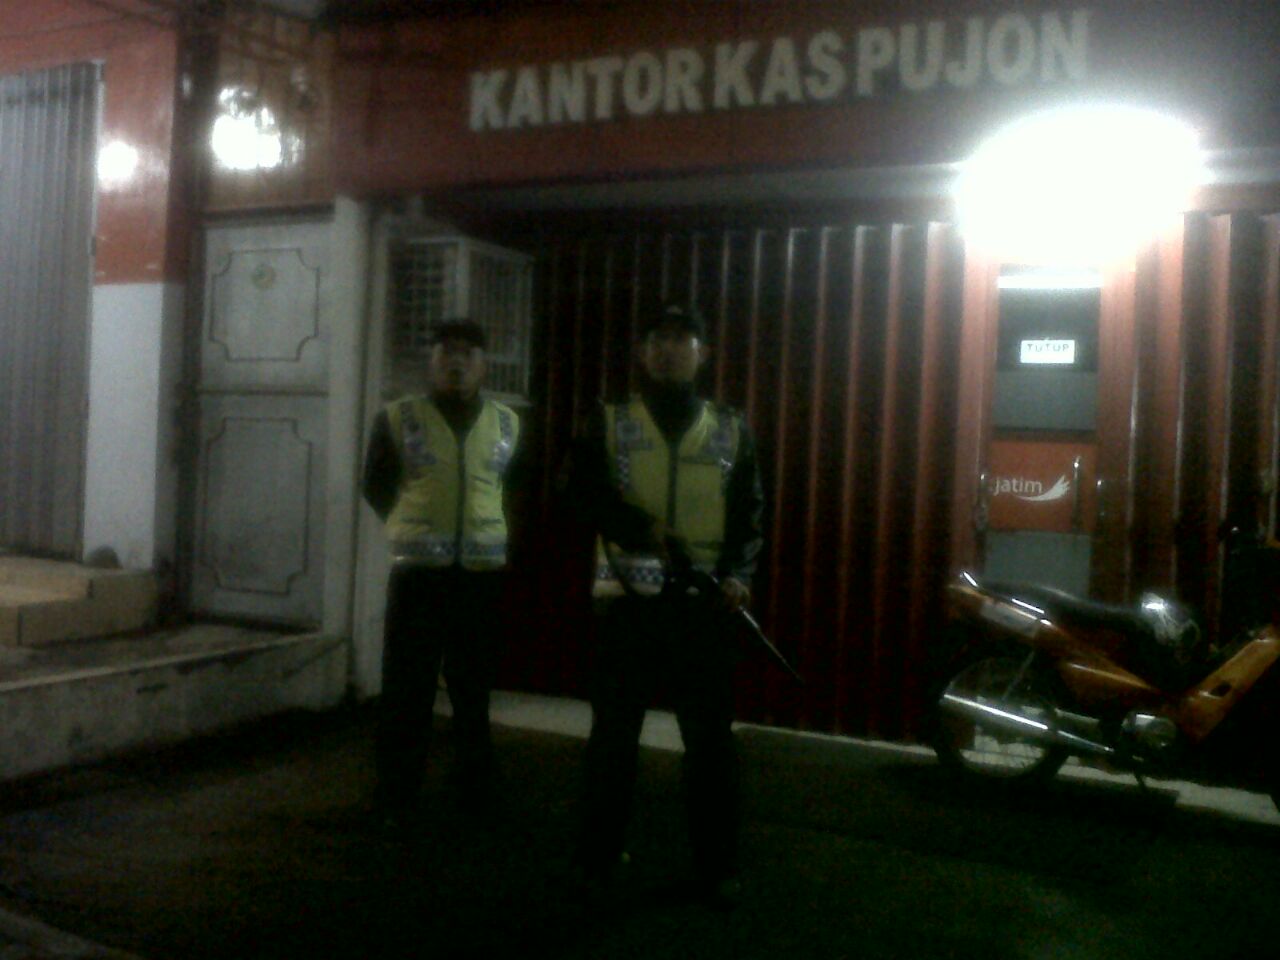 Unit Patroli Anggota Polsek Pujon Polres Batu Lakukan Patroli Malam Ciptakan Situasi Aman Kondusif di Wilayahnya